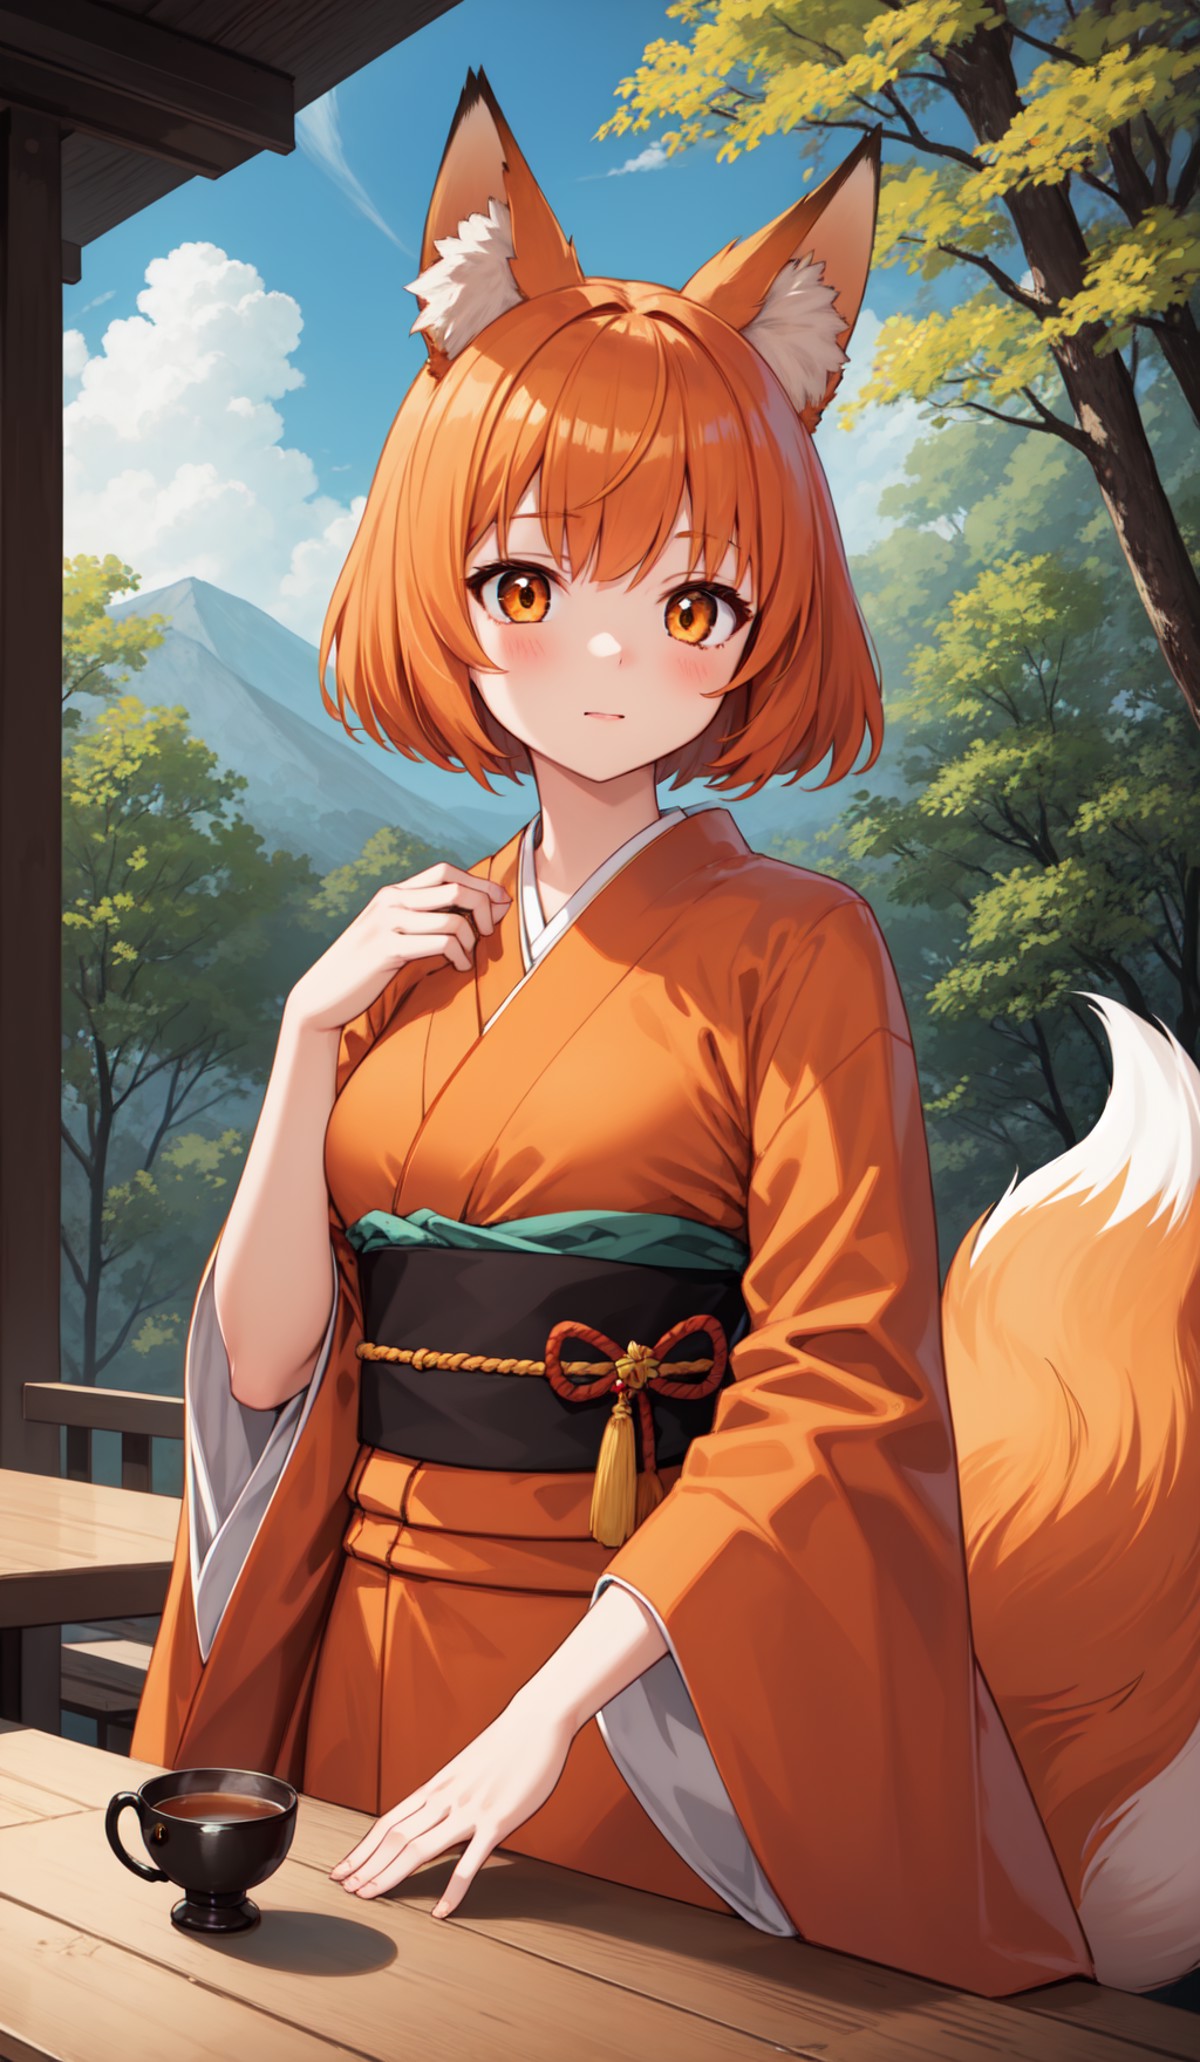 masterpiece, best quality, 1girl, short orange hair, bangs, fox ears, orange kimono, table, tea, majestic forest, lush clo...